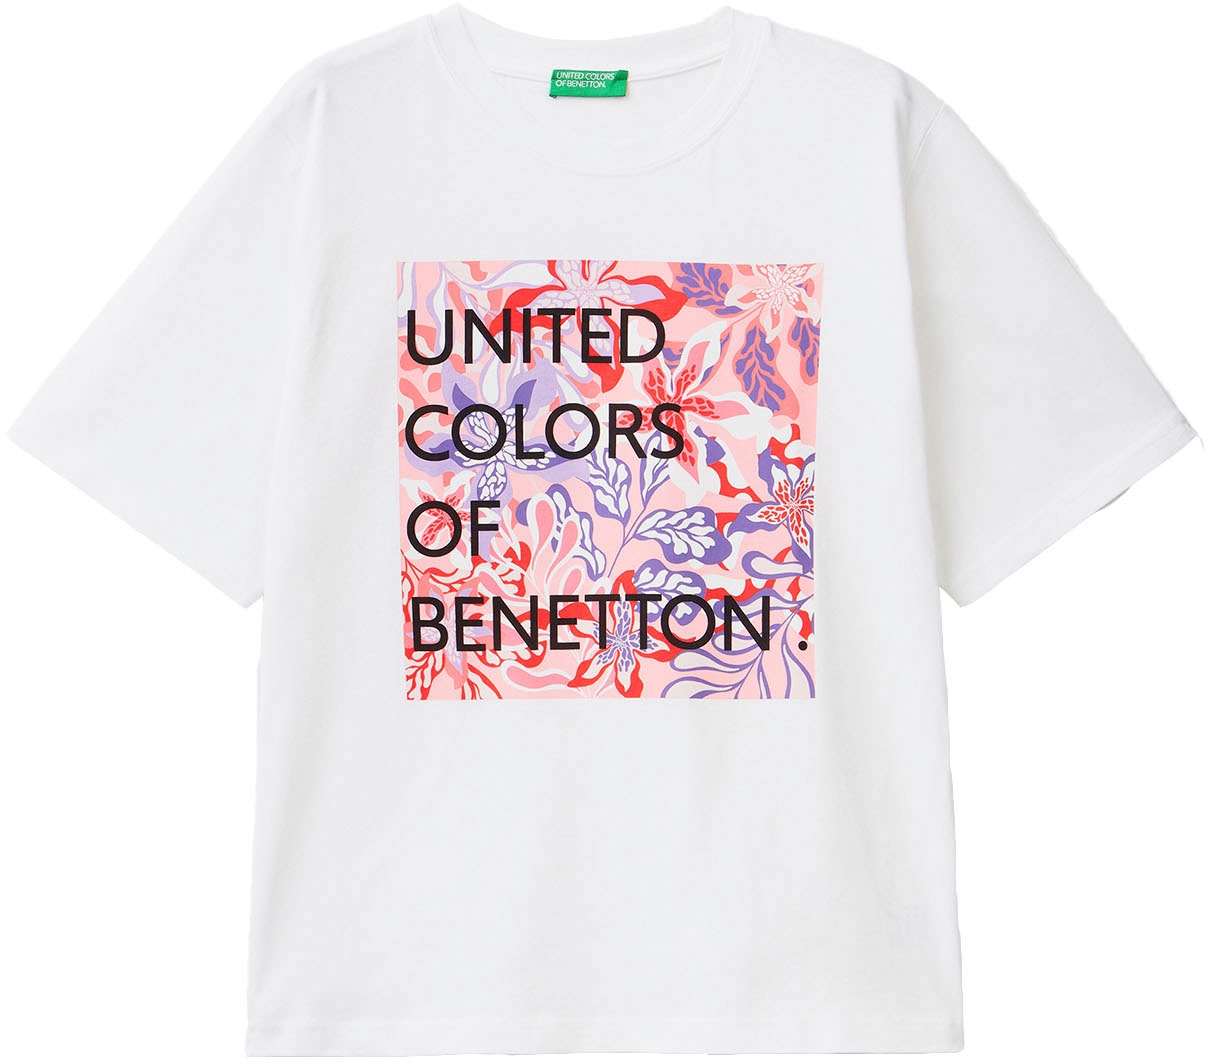 Benetton of T-Shirt versandkostenfrei Colors United kaufen ♕